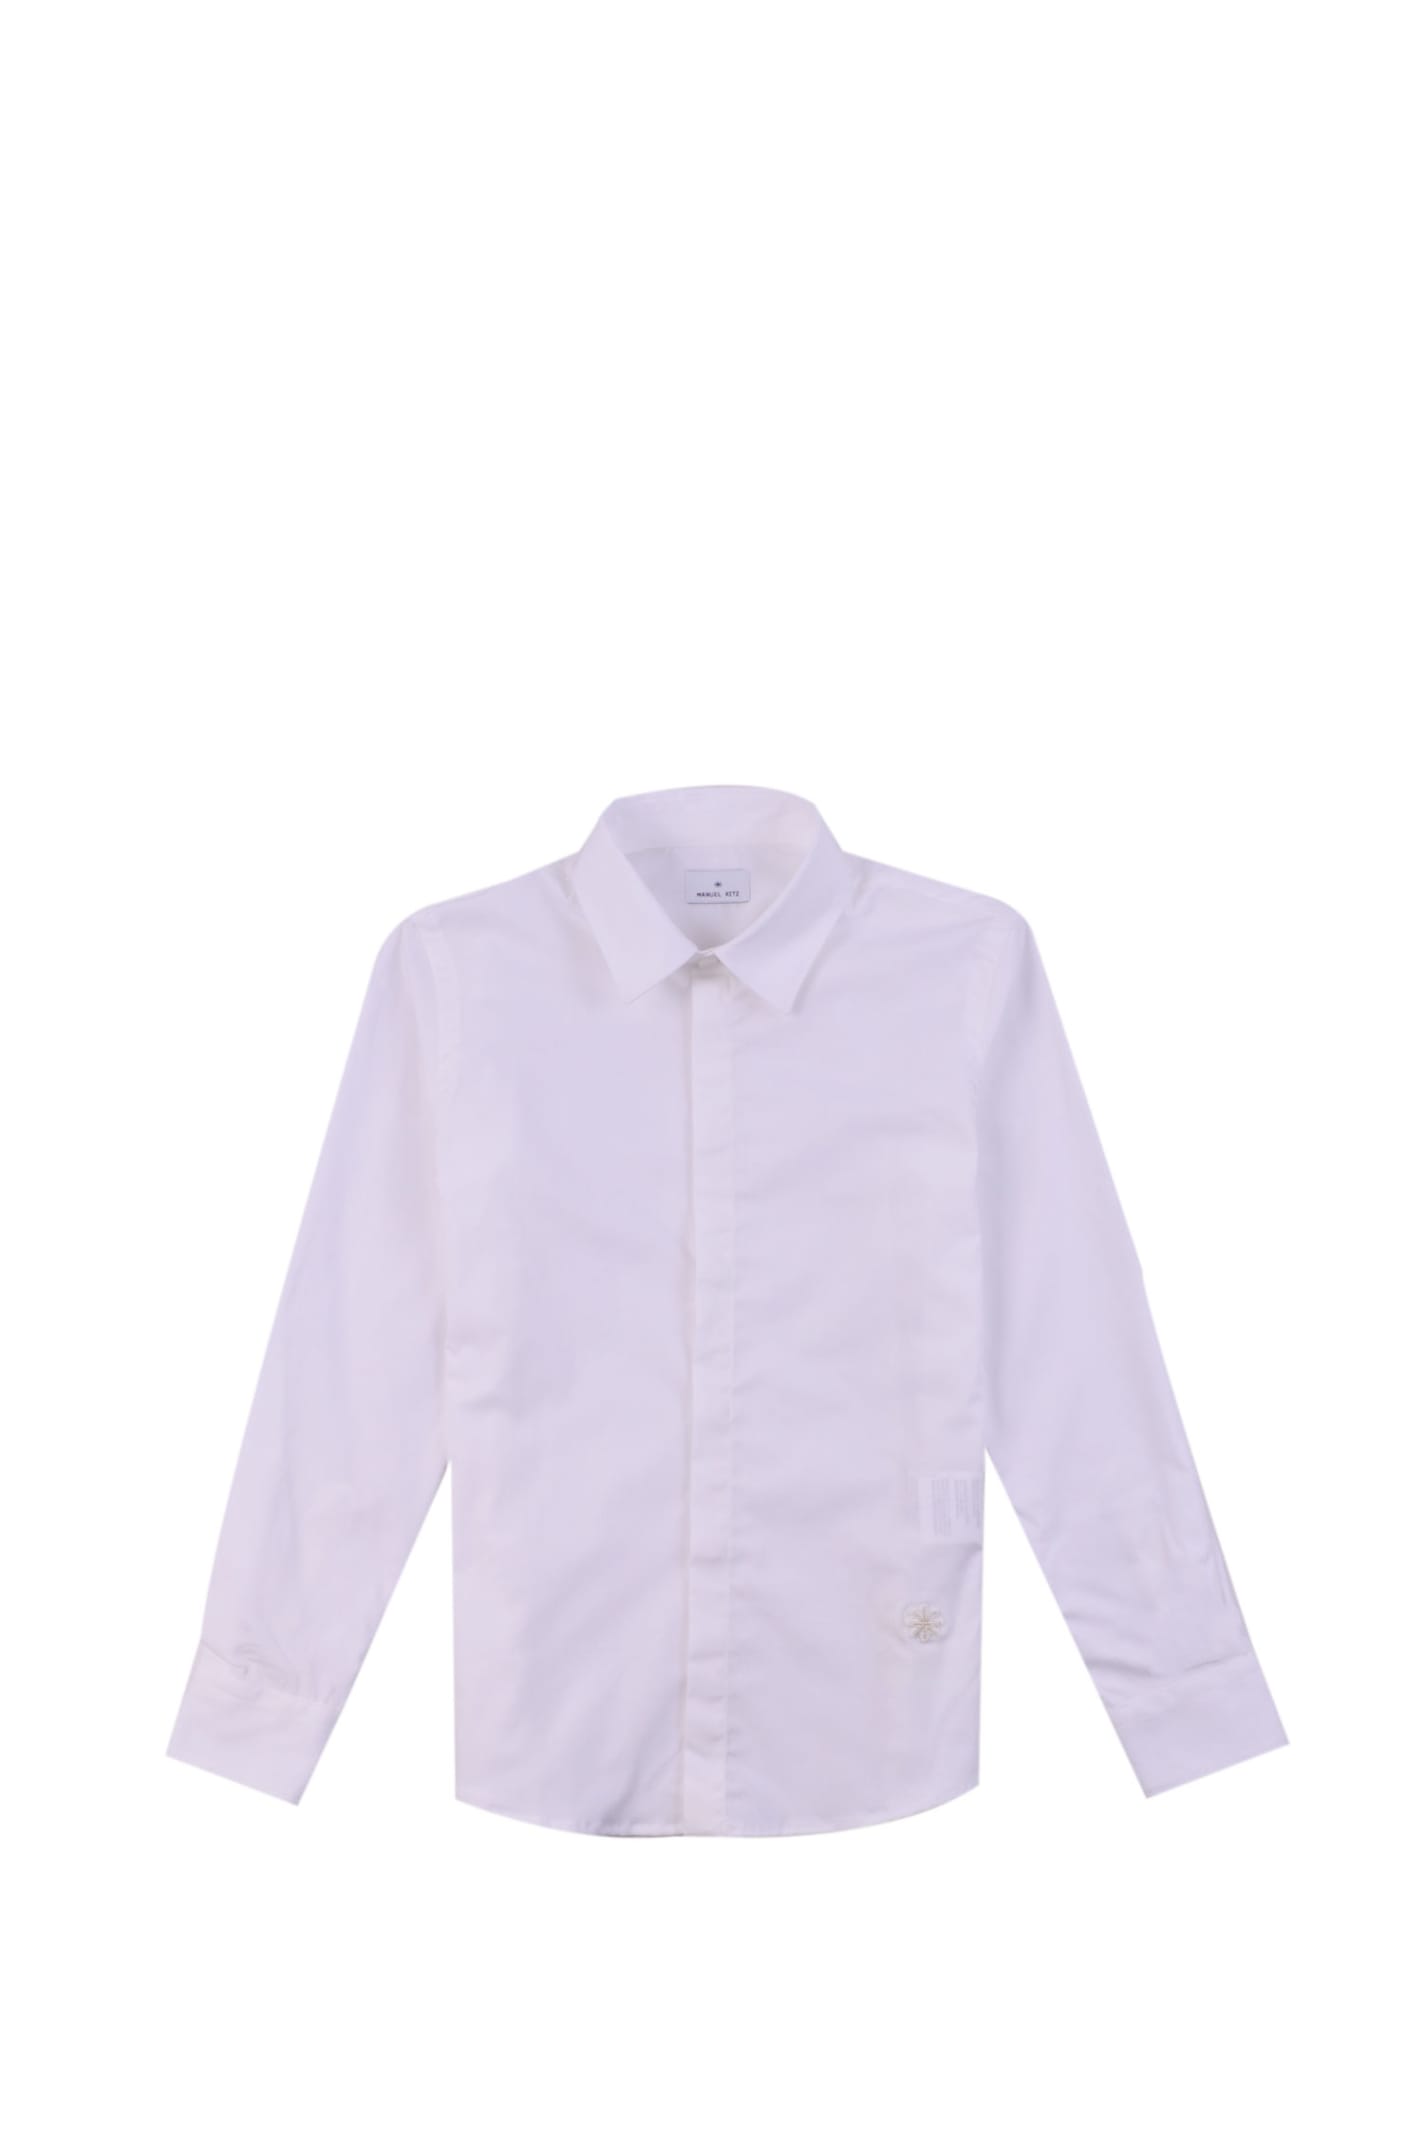 Manuel Ritz Kids' Cotton Shirt In White